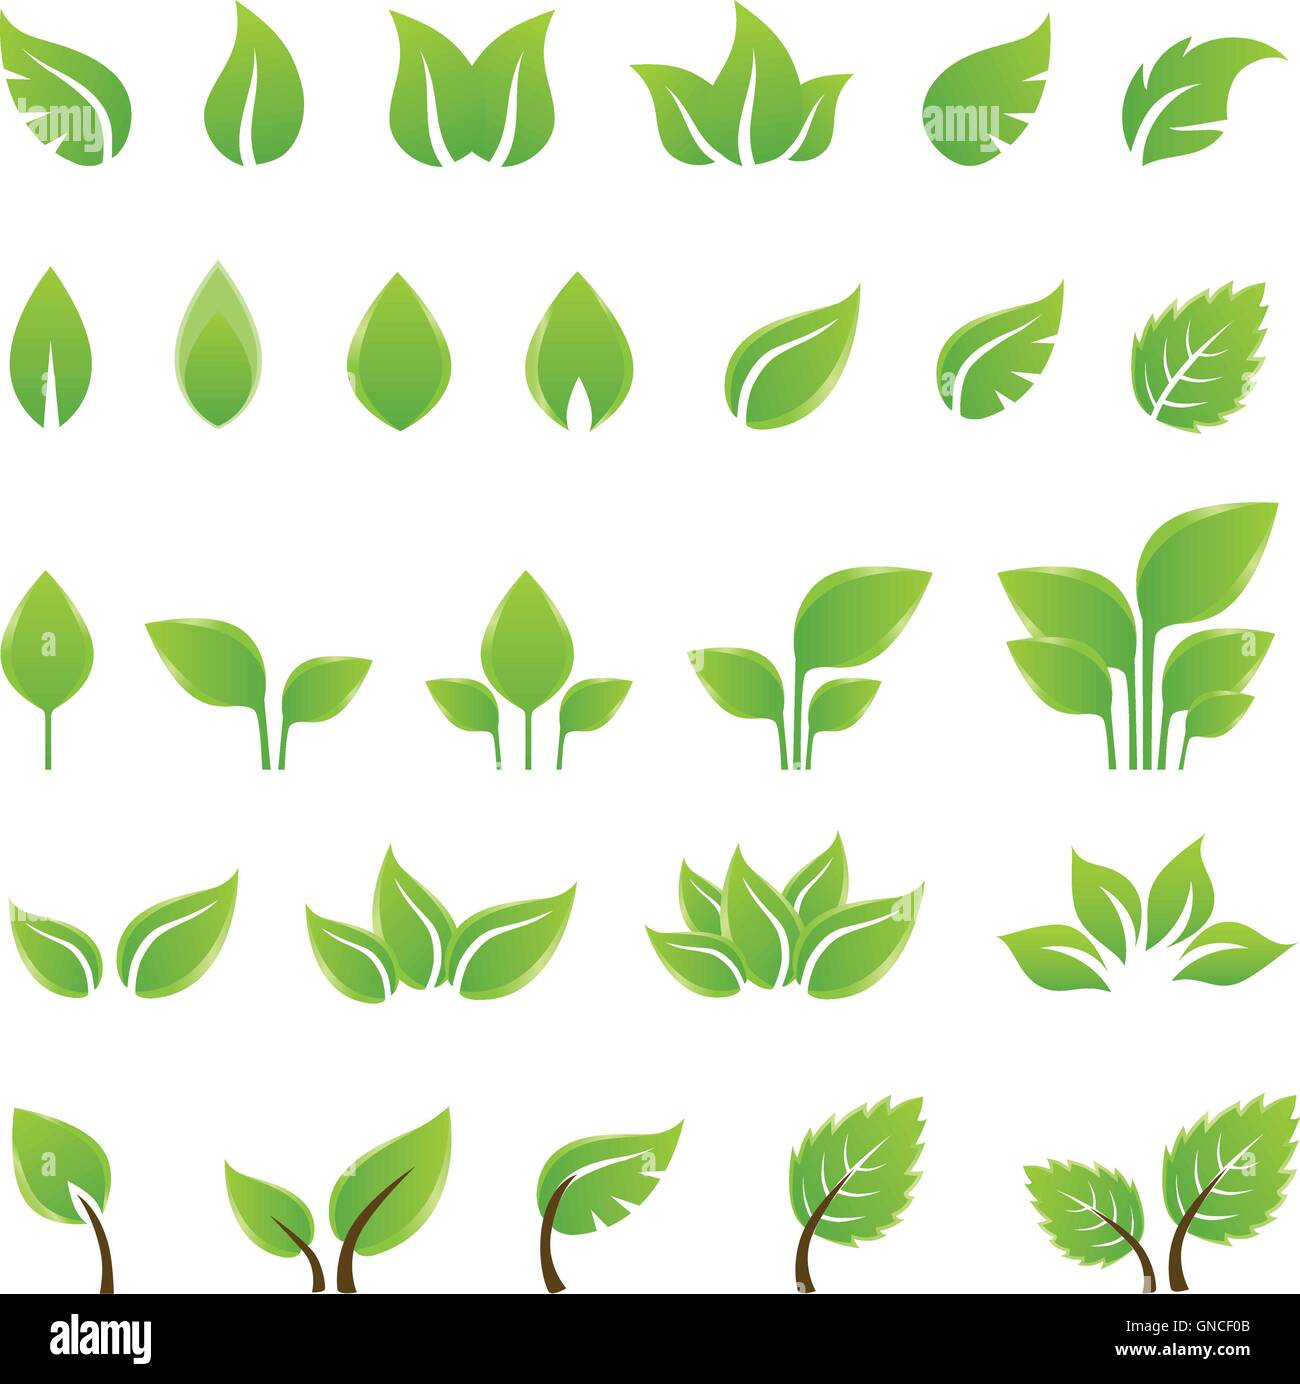 Set of green leaves design elements. Stock Vector